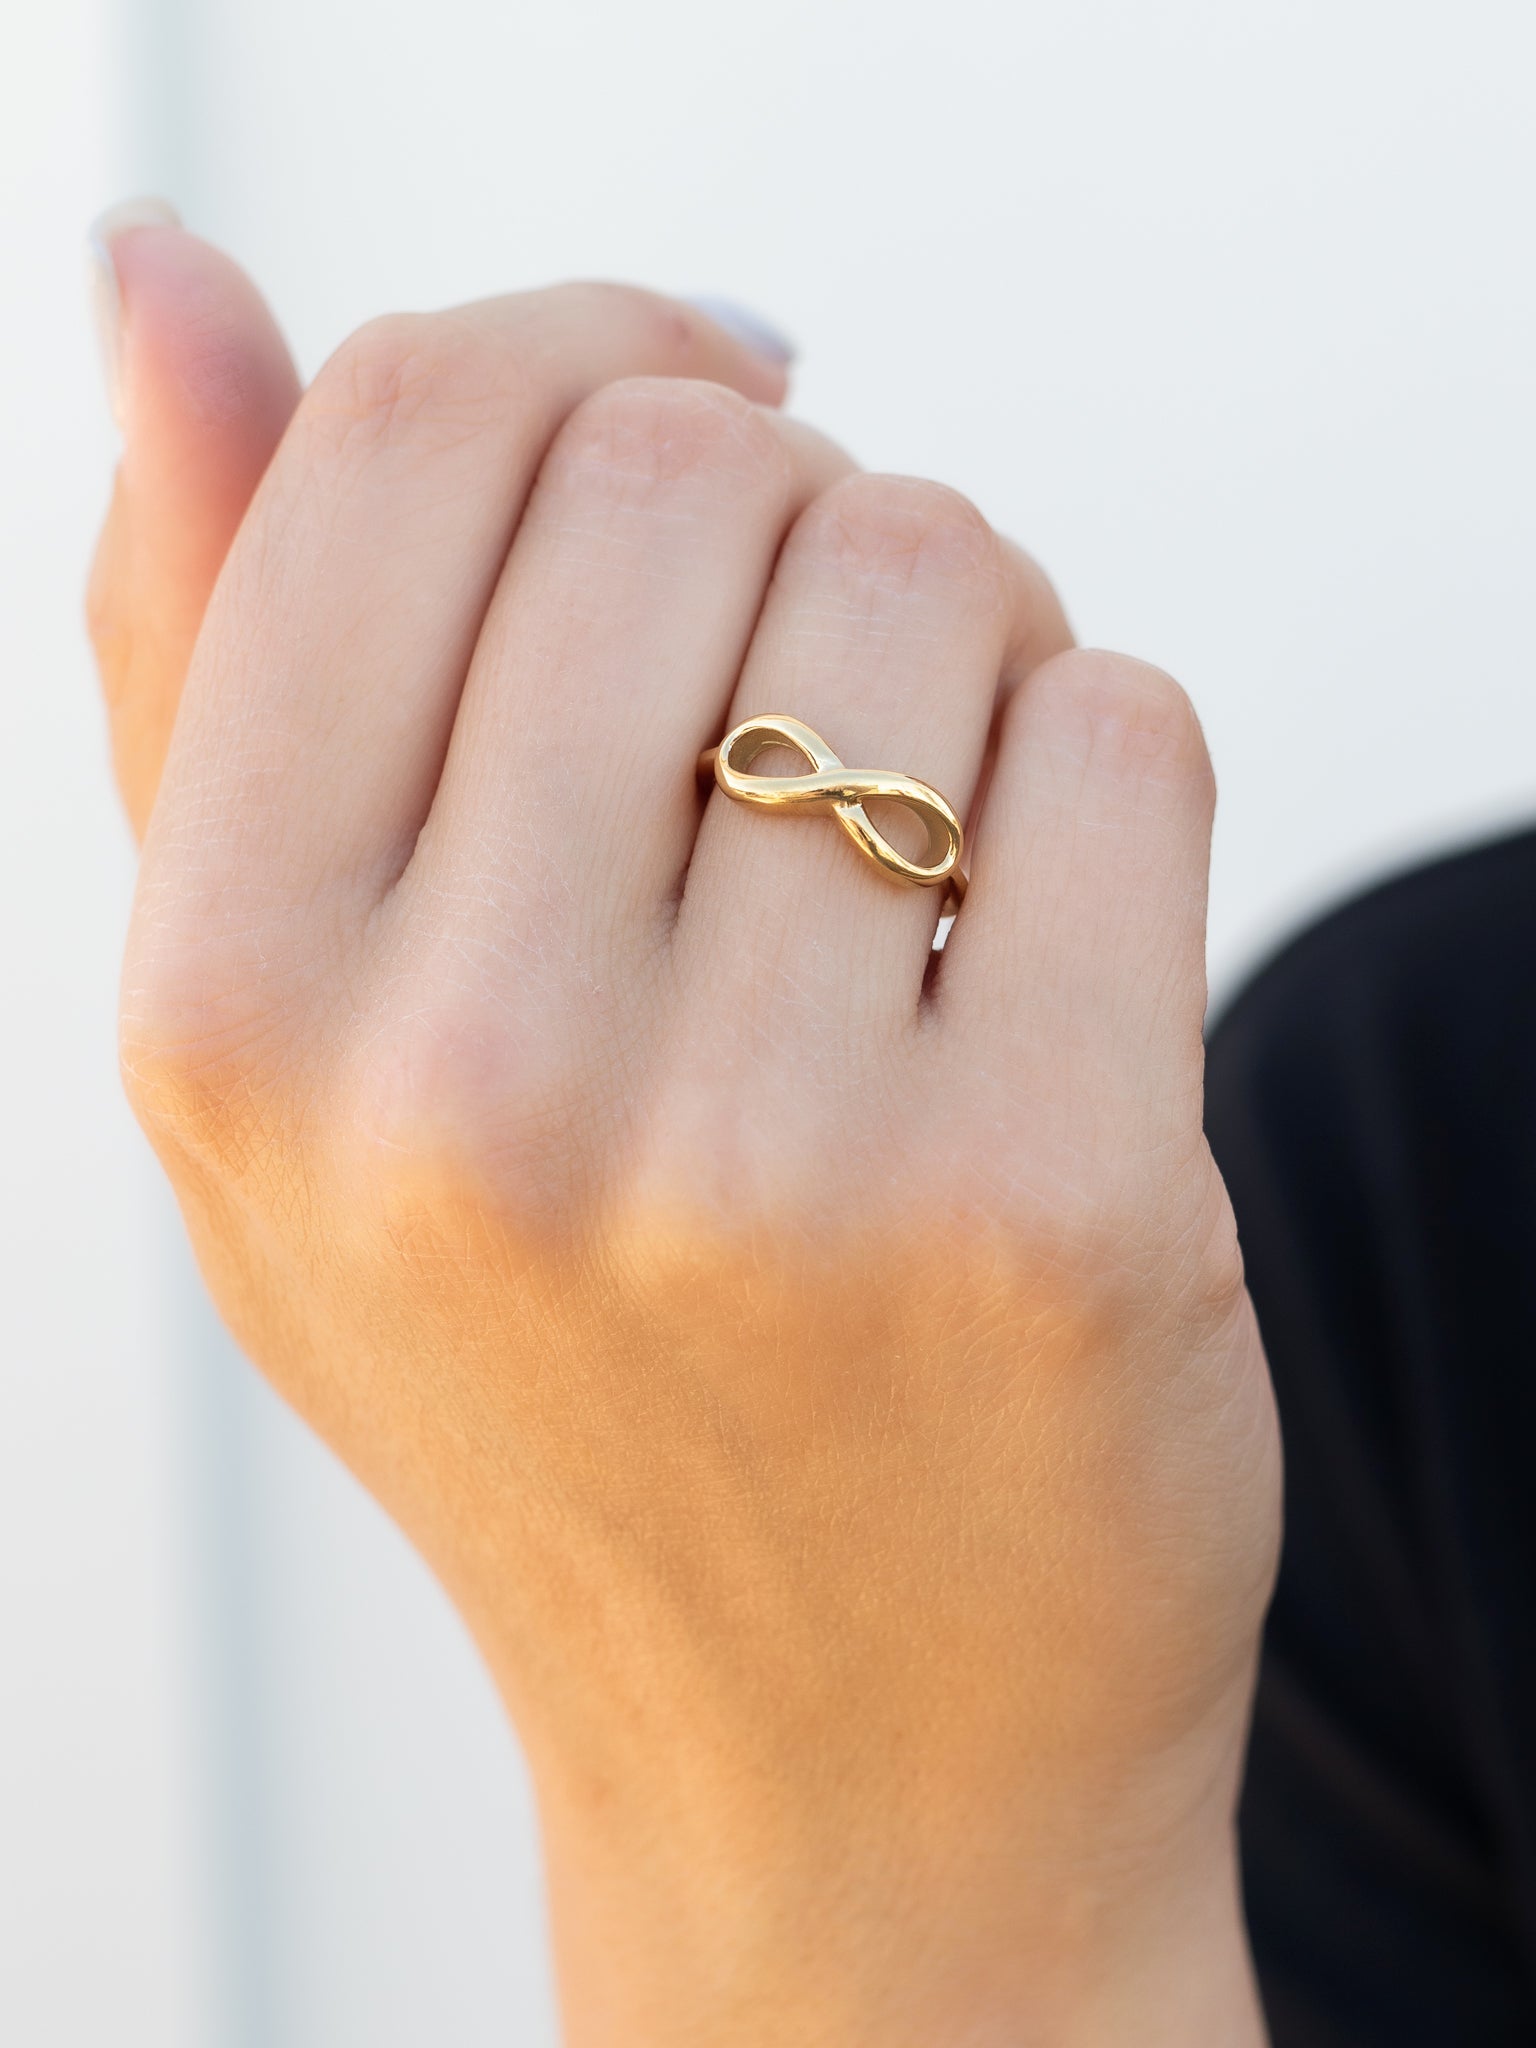 Buy Diamond Infinity Ring / Gold Infinity Ring / 14k Gold Diamond Infinity  Ring / Solid Gold Infinity Ring / Infinity Ring / Love Ring Online in India  - Etsy